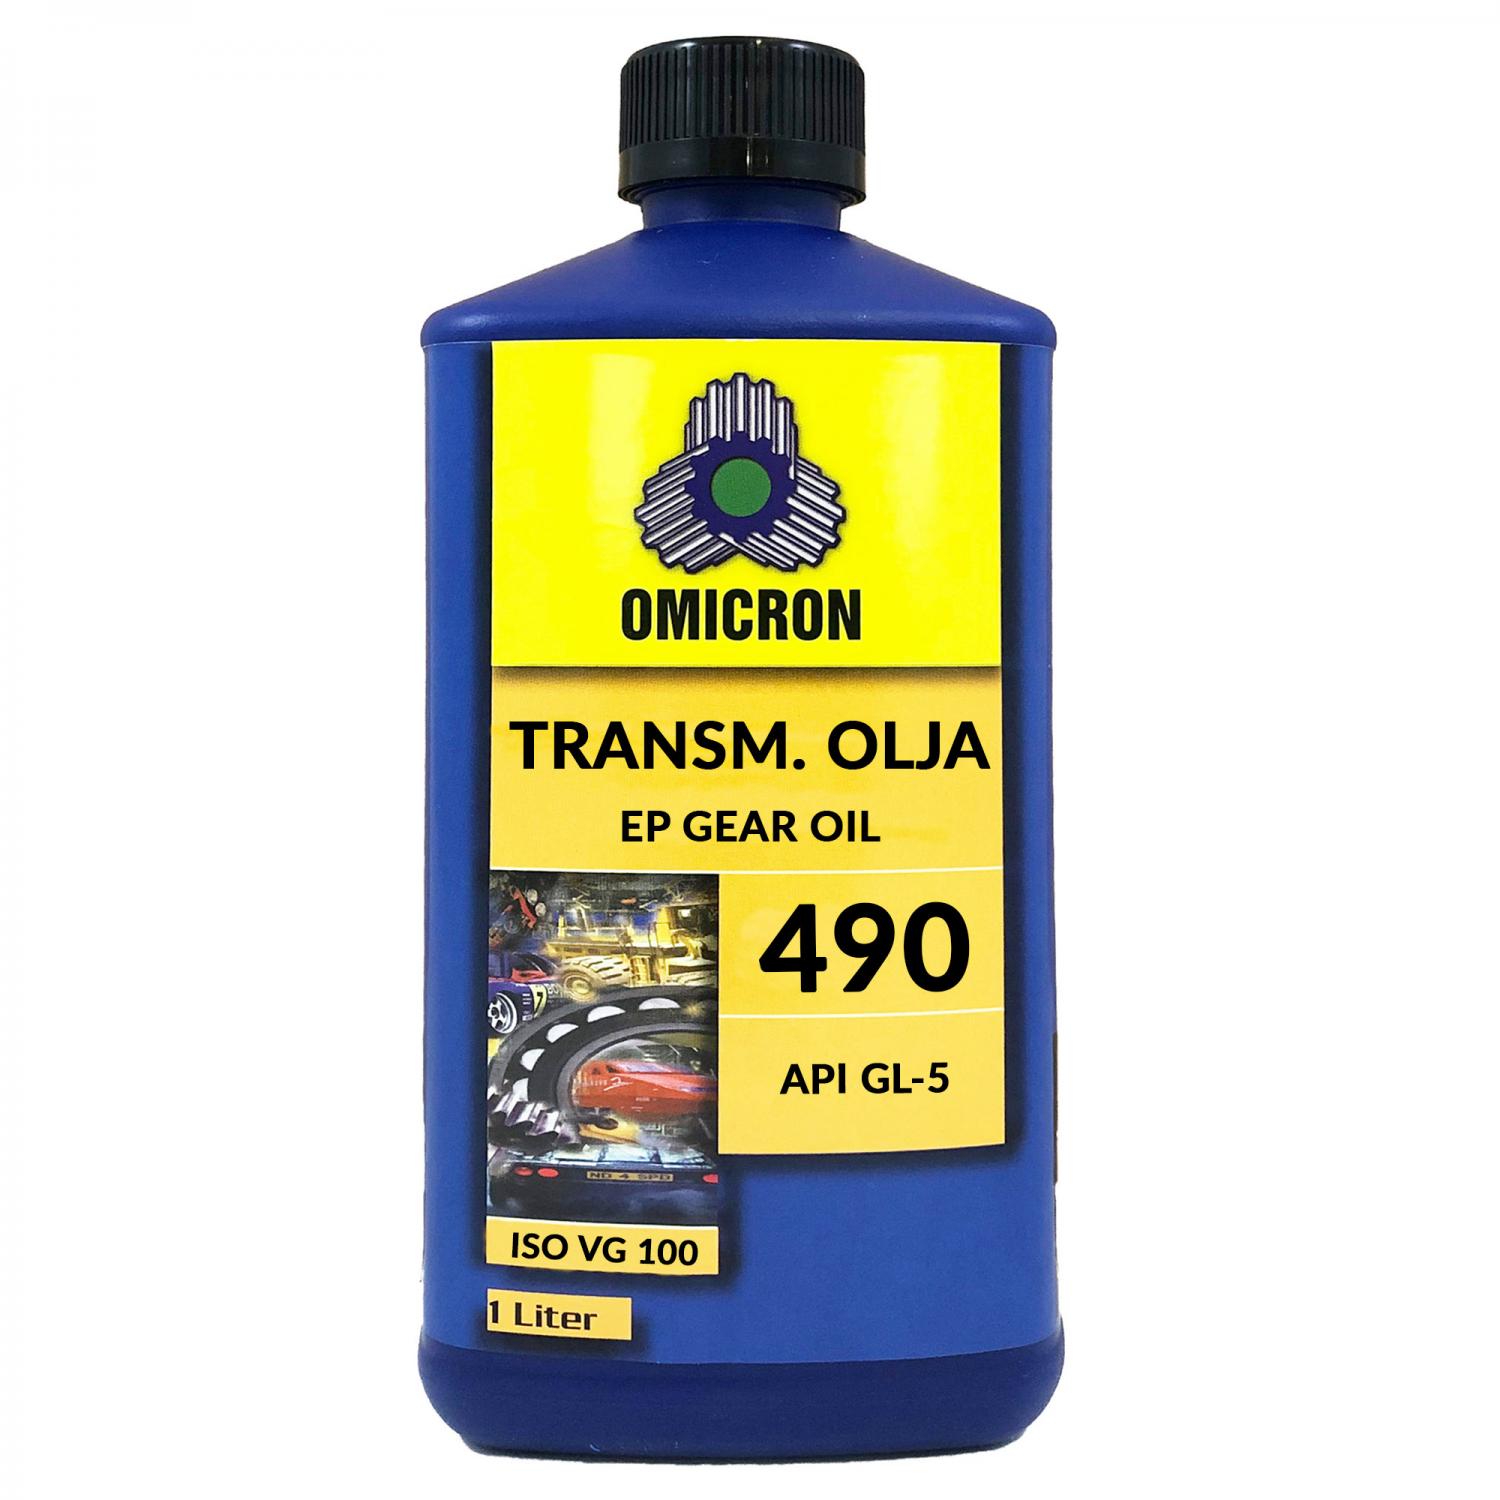 Omicron 490 ISO VG 100 Transmissionsolja API GL...